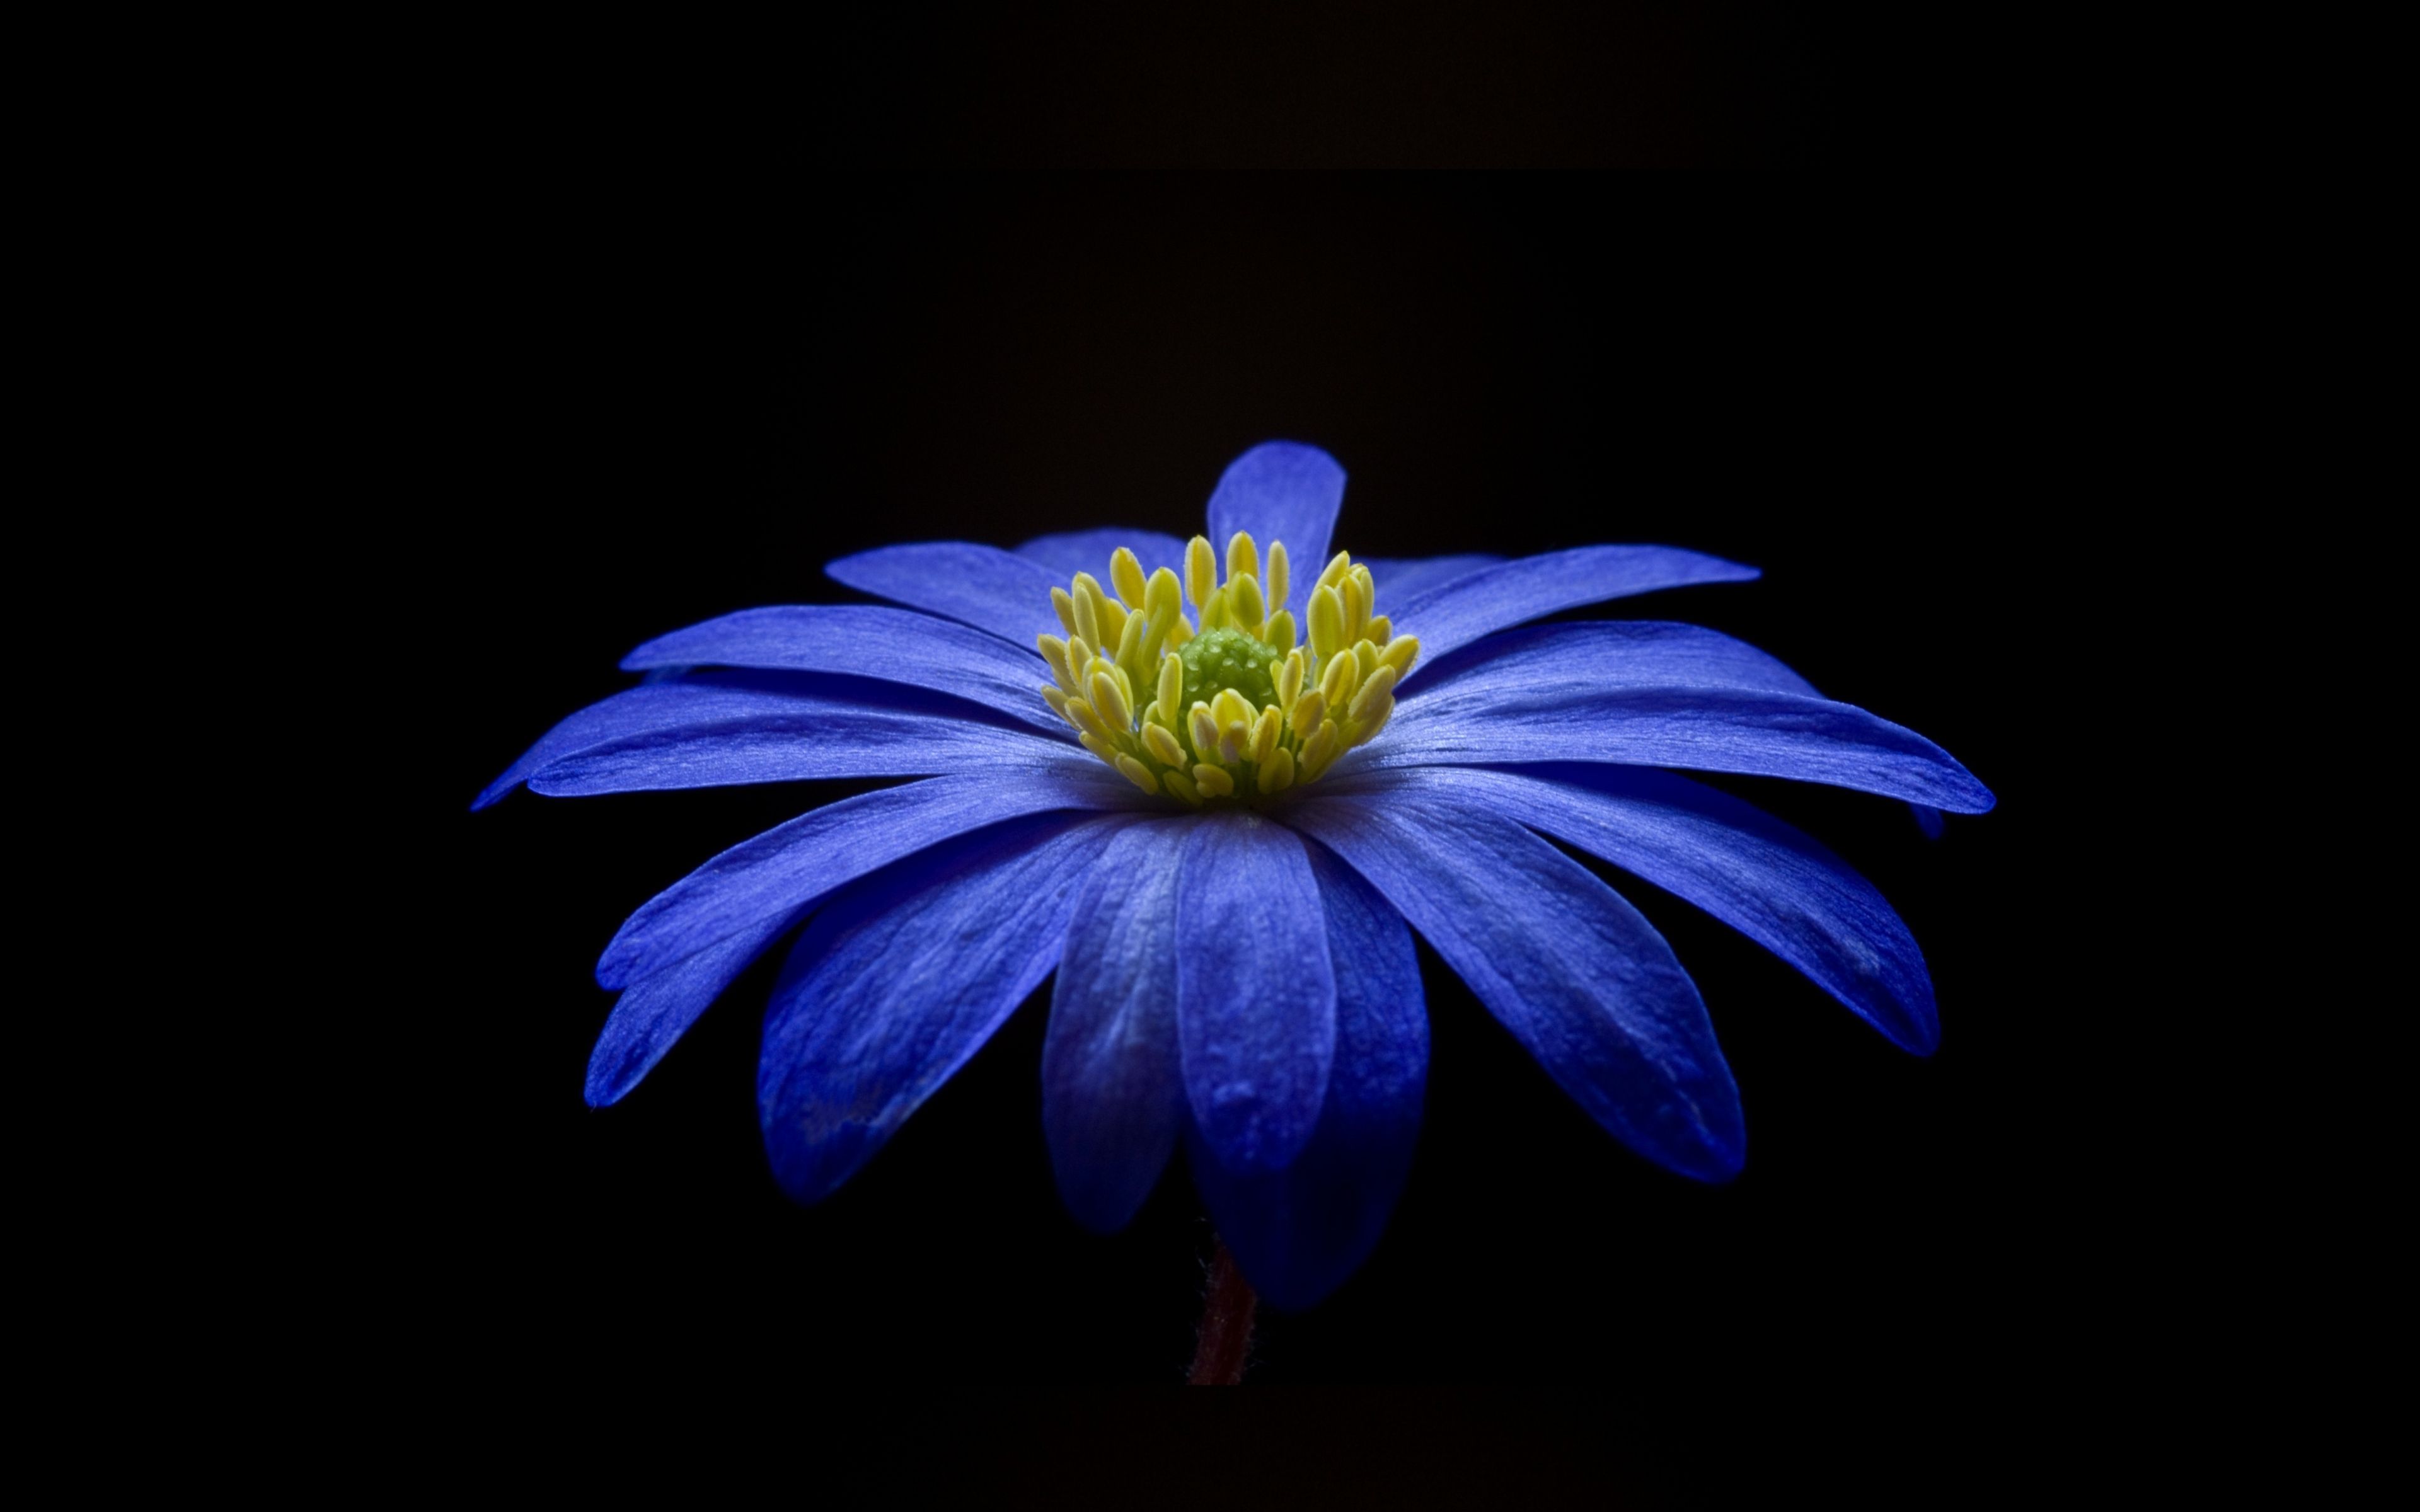 Download 3840x2400 wallpaper anemone, blue flower, portrait, 4k, ultra HD 16: widescreen, 3840x2400 HD image, background, 19065